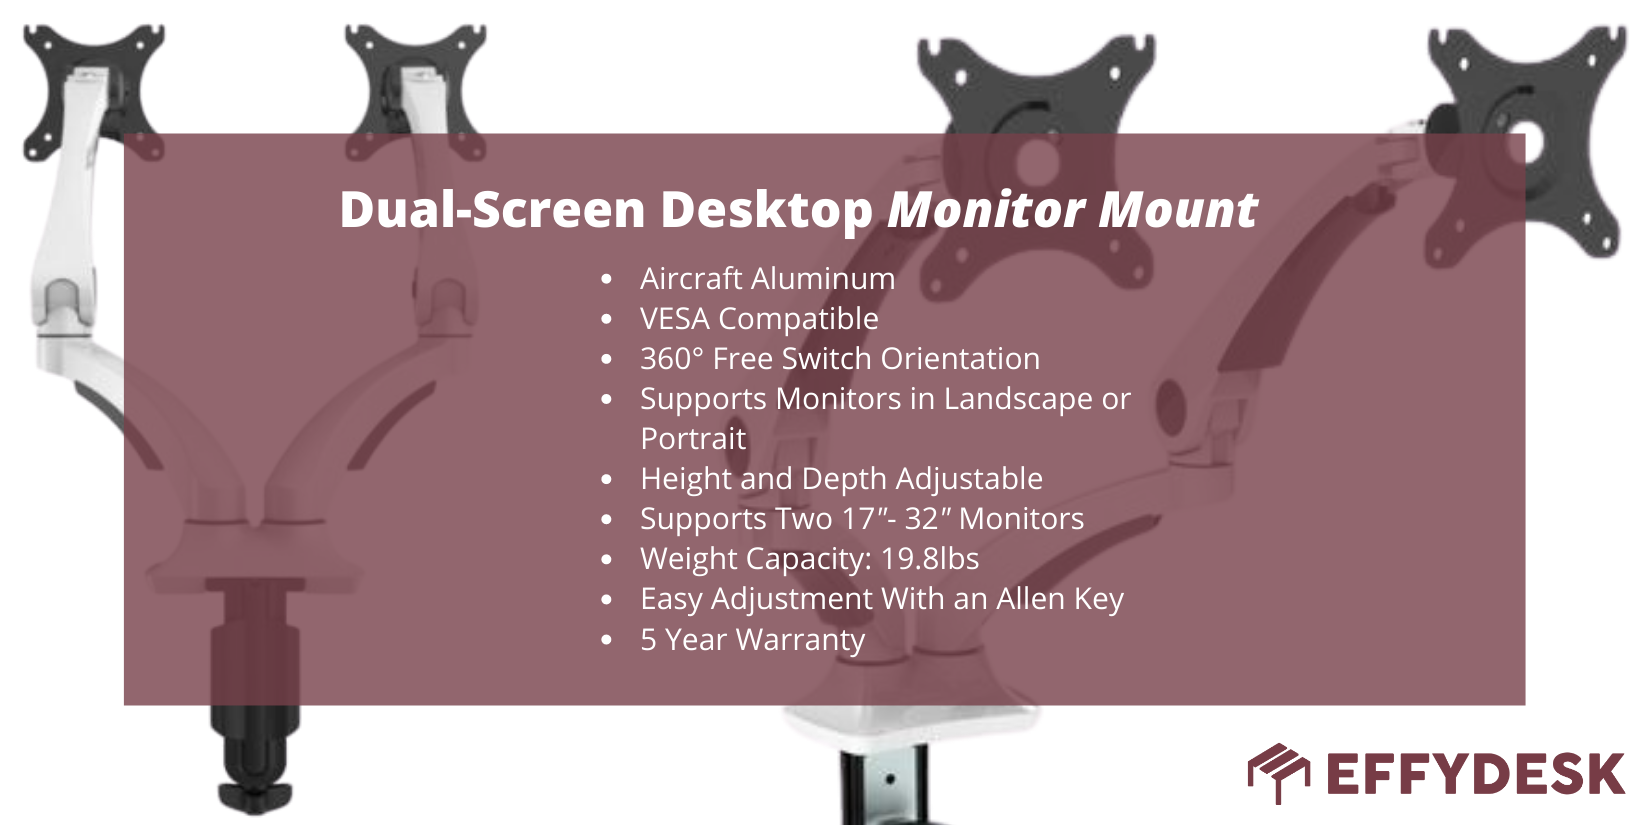 effydesk dual monitor mount specs